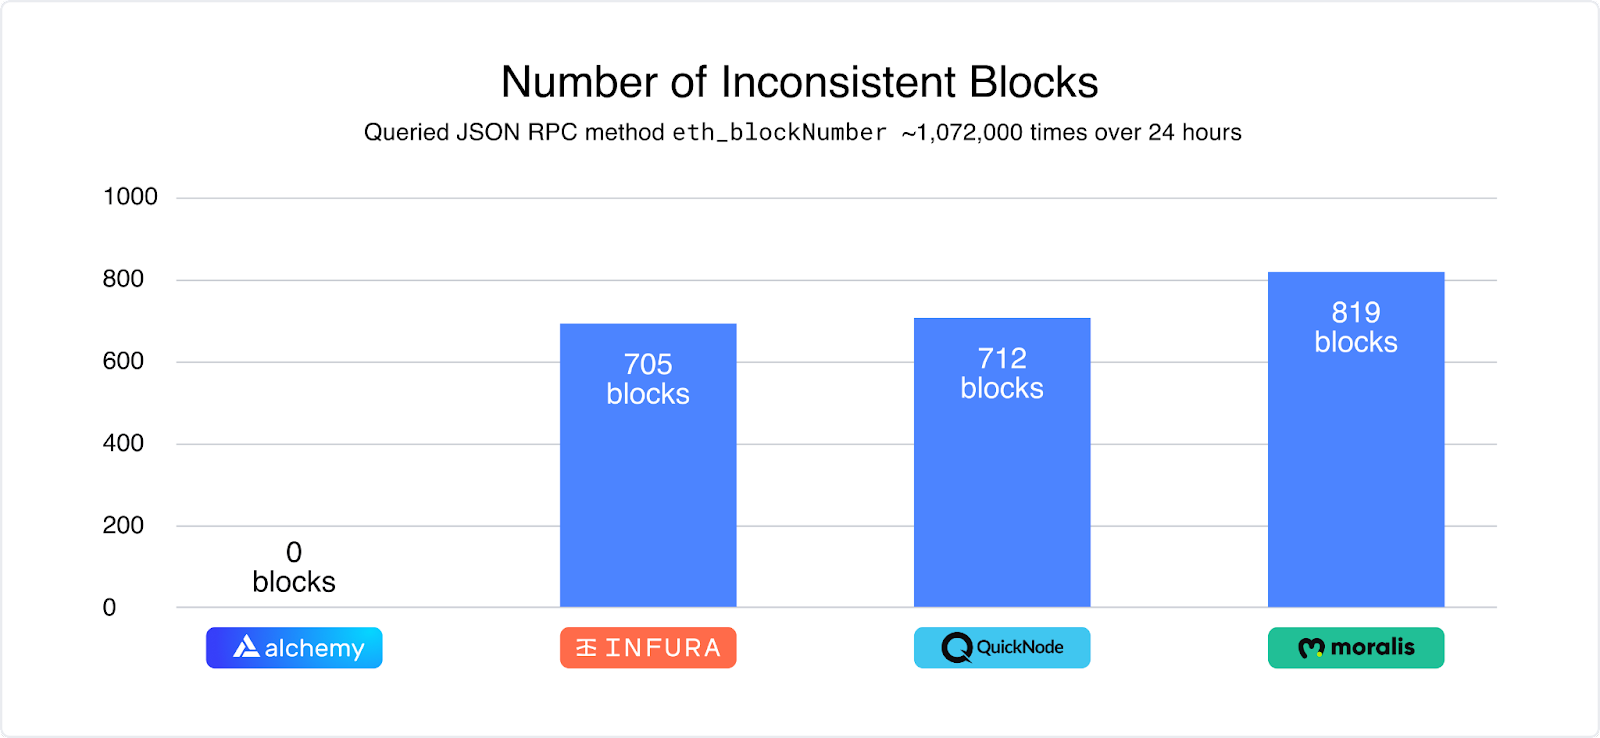 Number of inconsistent blocks